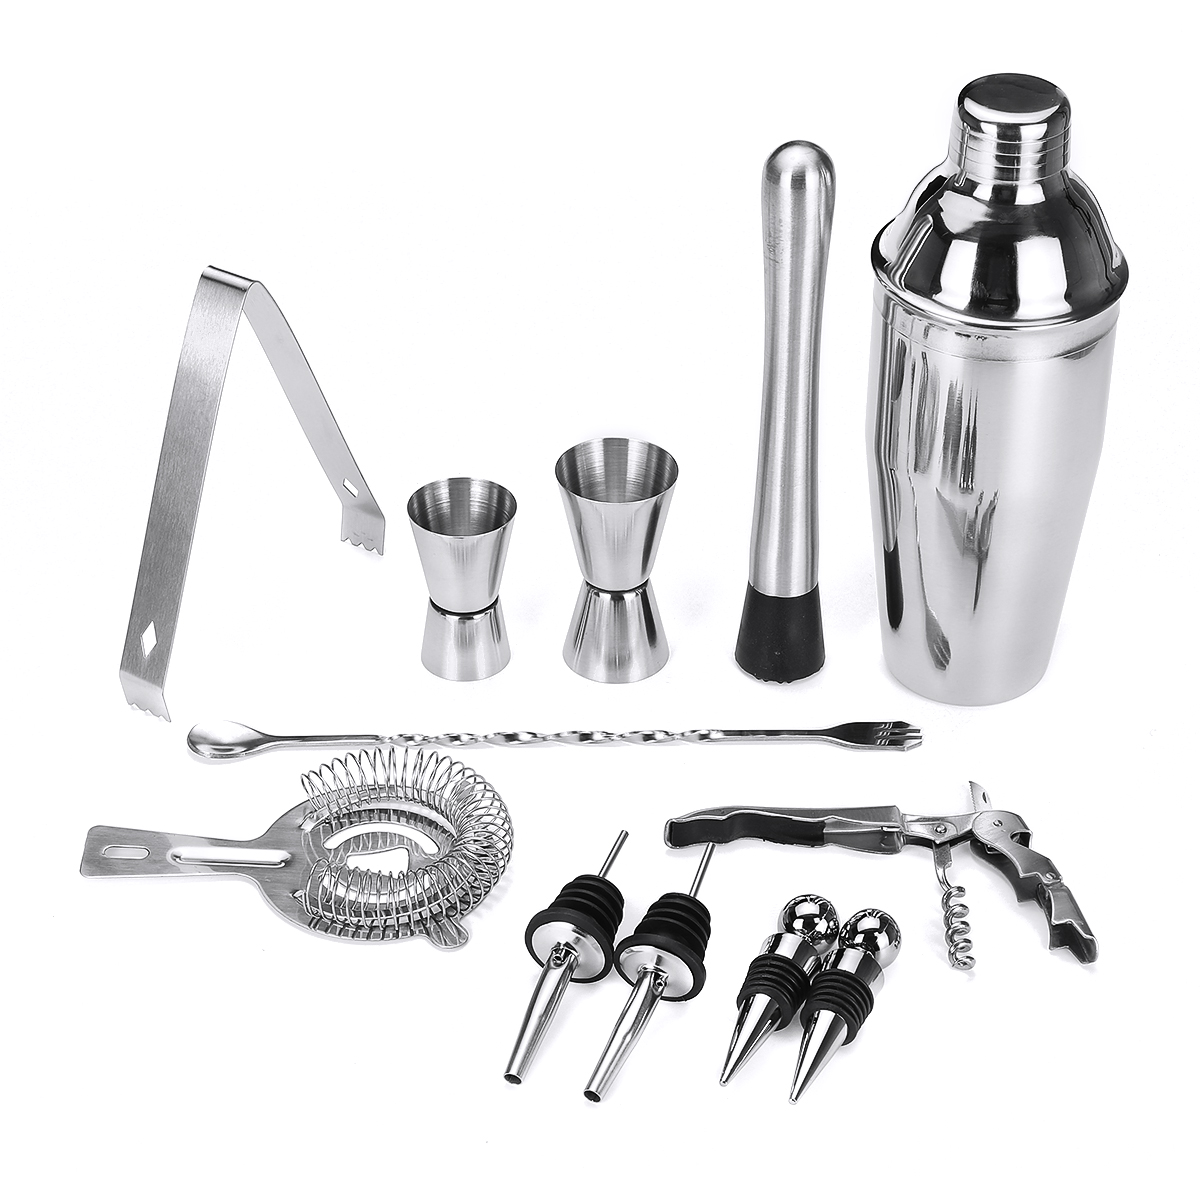 Stainless-Steel-Vintage-Boston-Cocktail-Shaker-Set-Kit-750ml-Jigger-Mixer-1635968